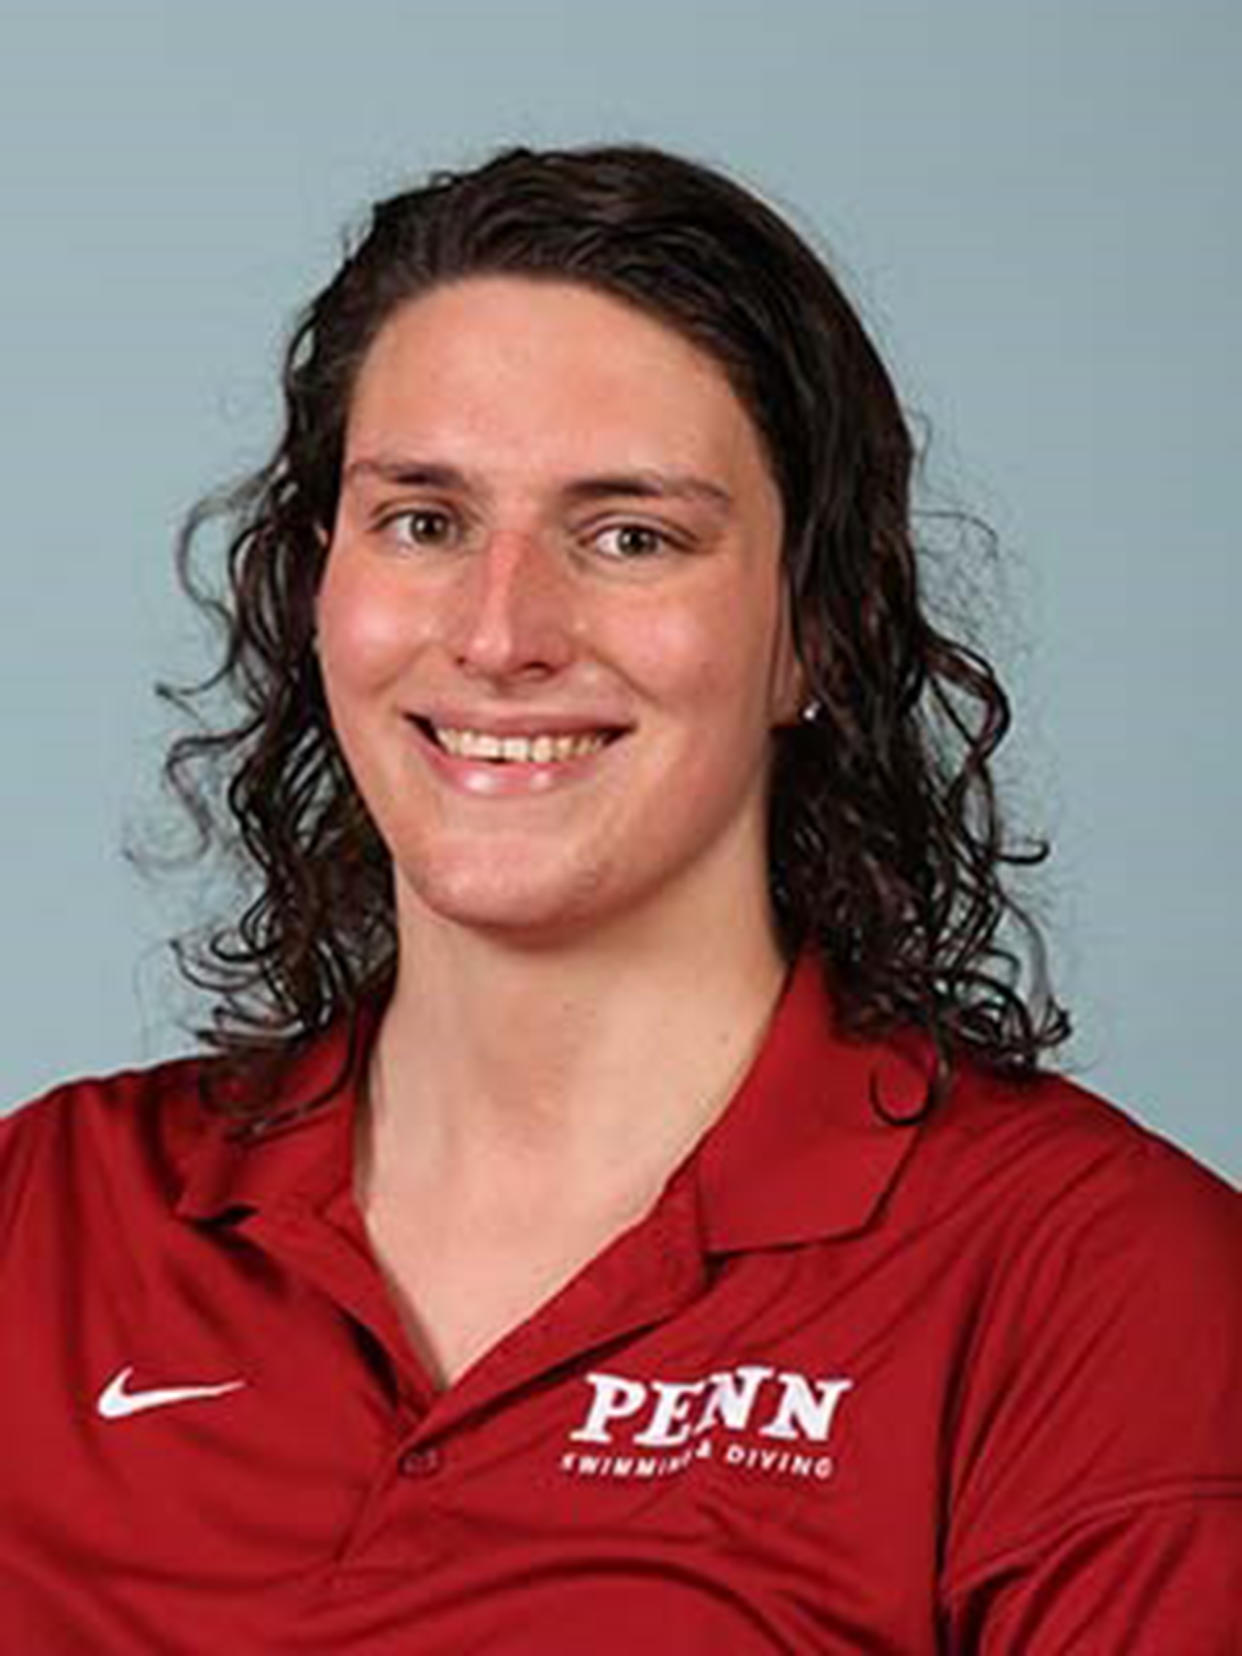 Penn swimmer Lia Thomas (Penn Athletics)